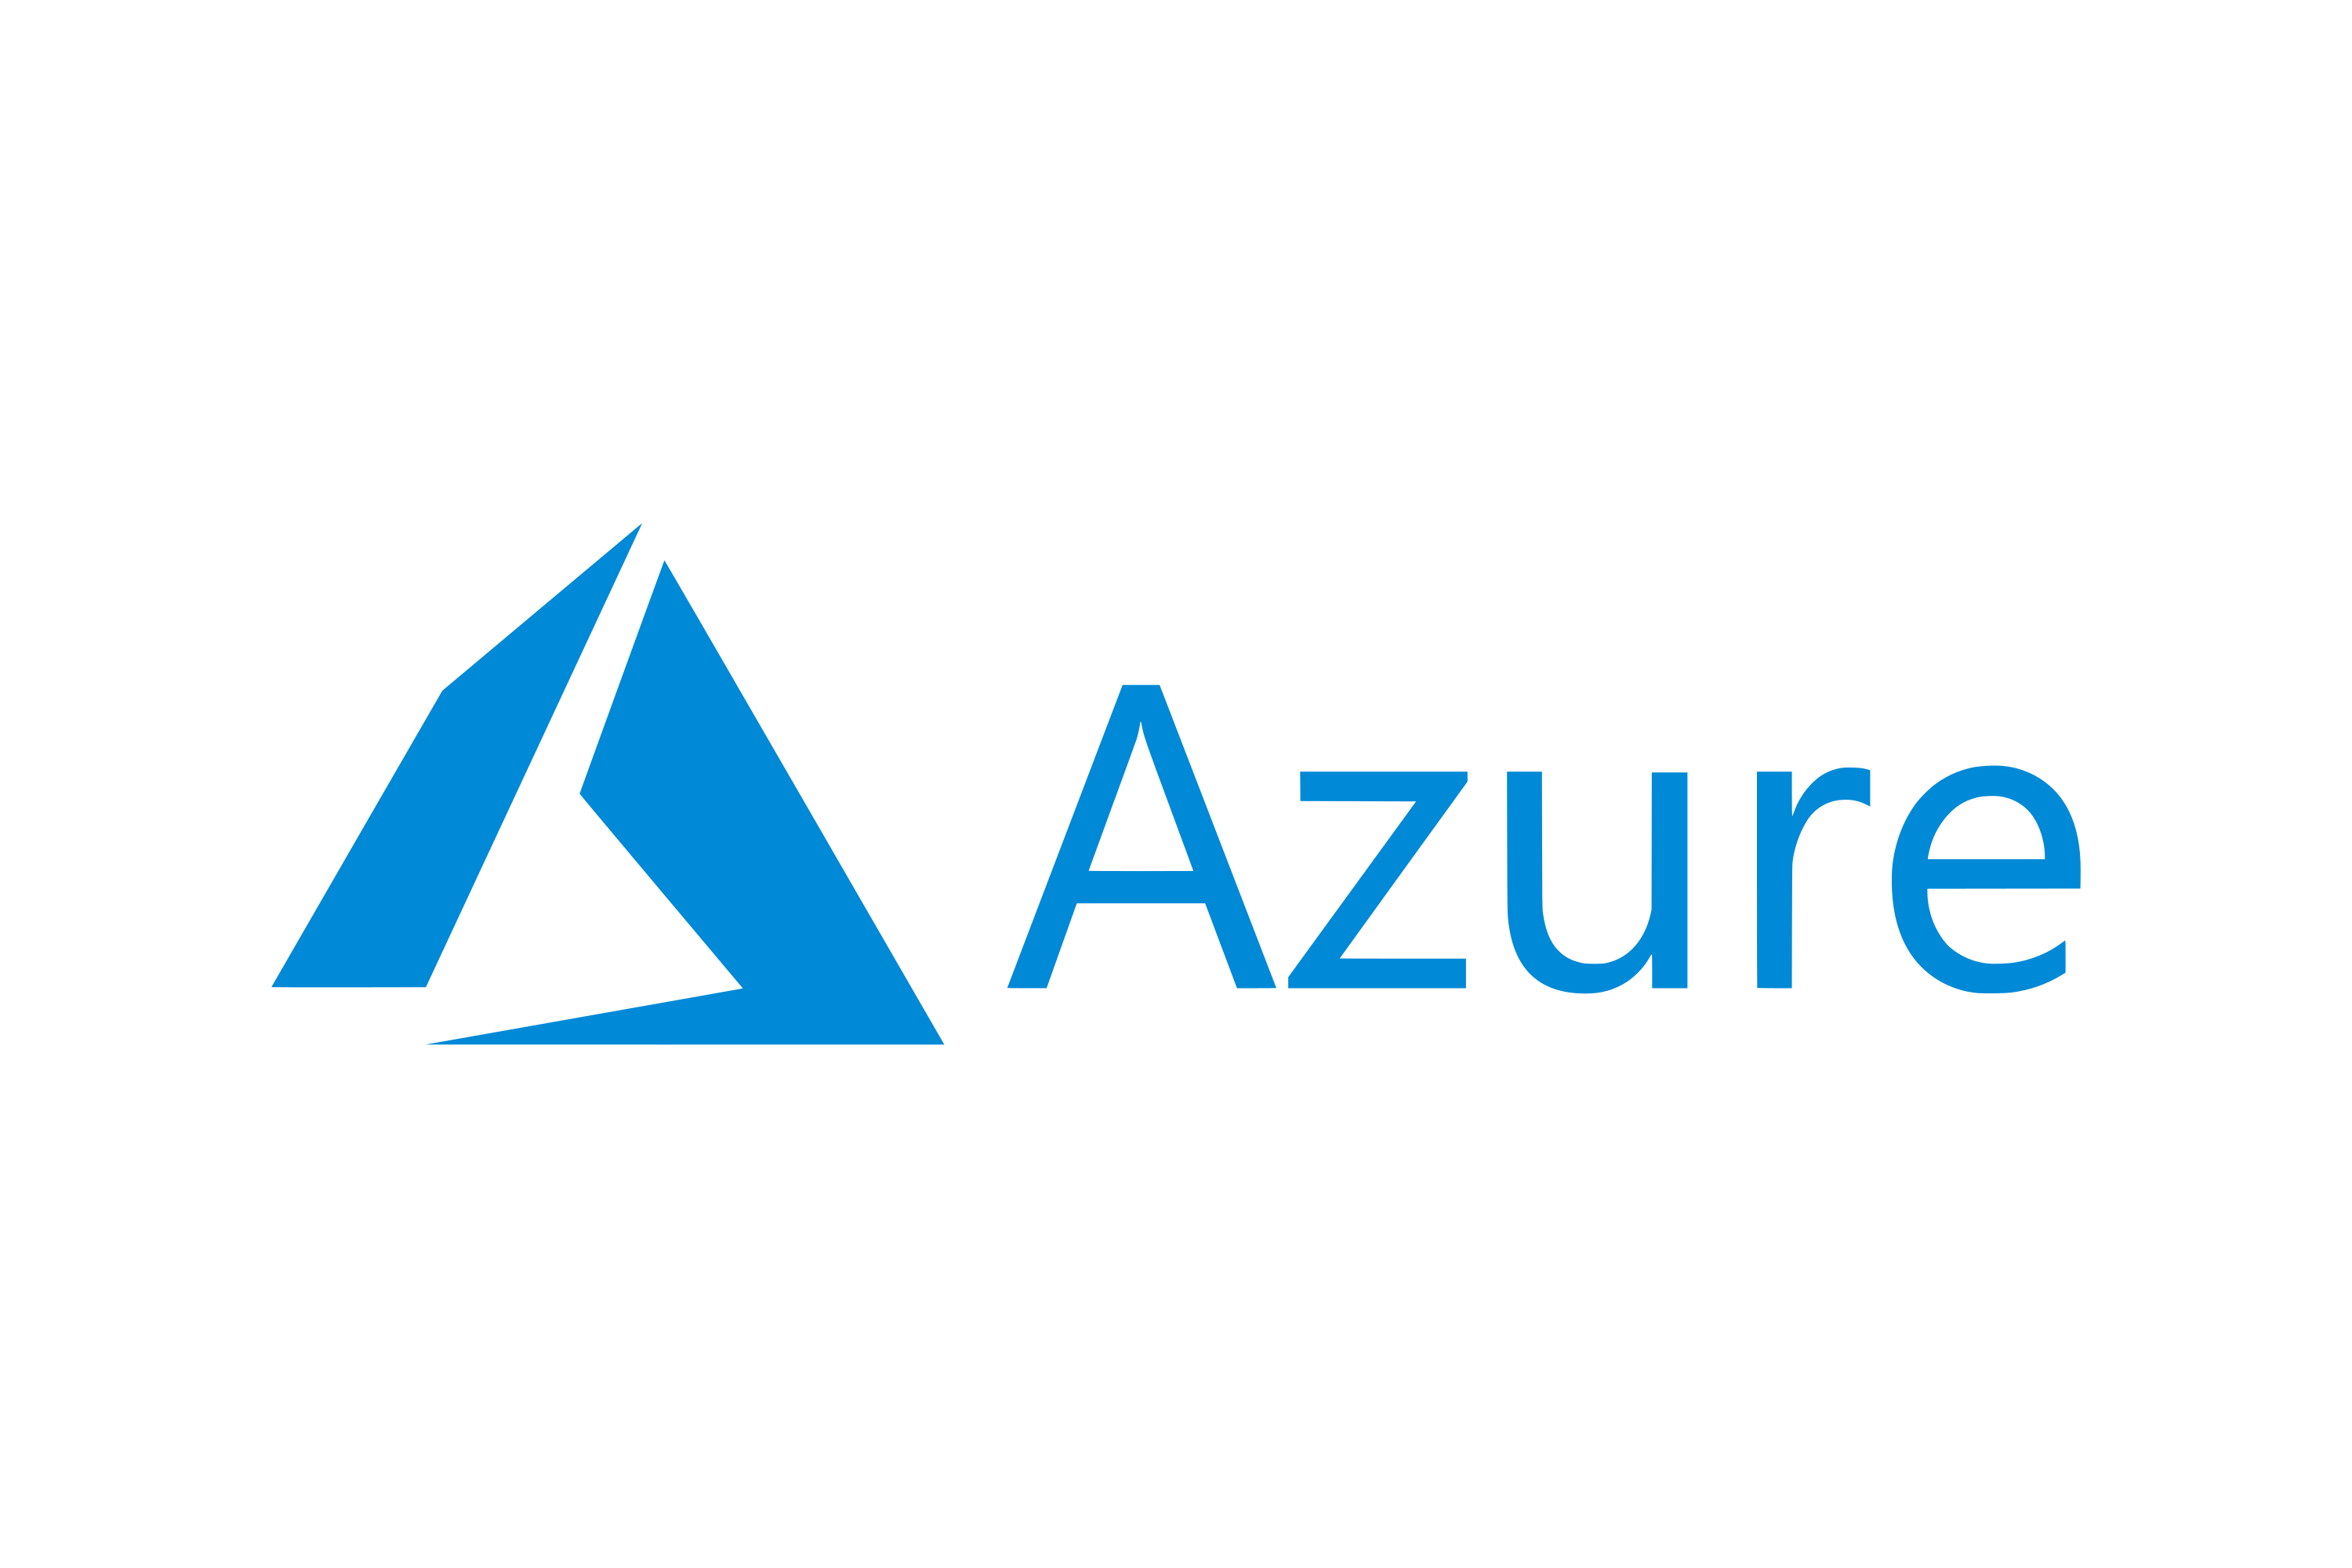 The Azure logo